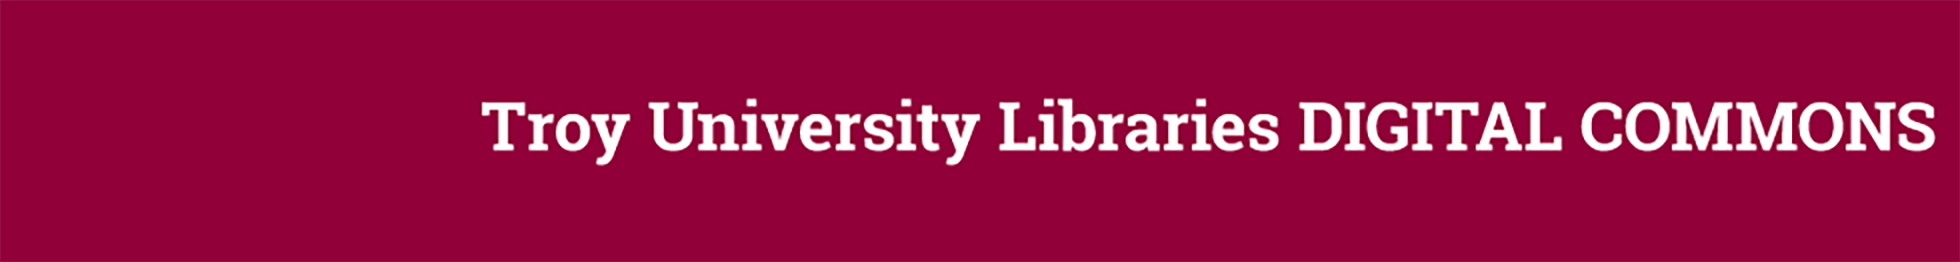 Troy University Libraries DIGITAL COMMONS